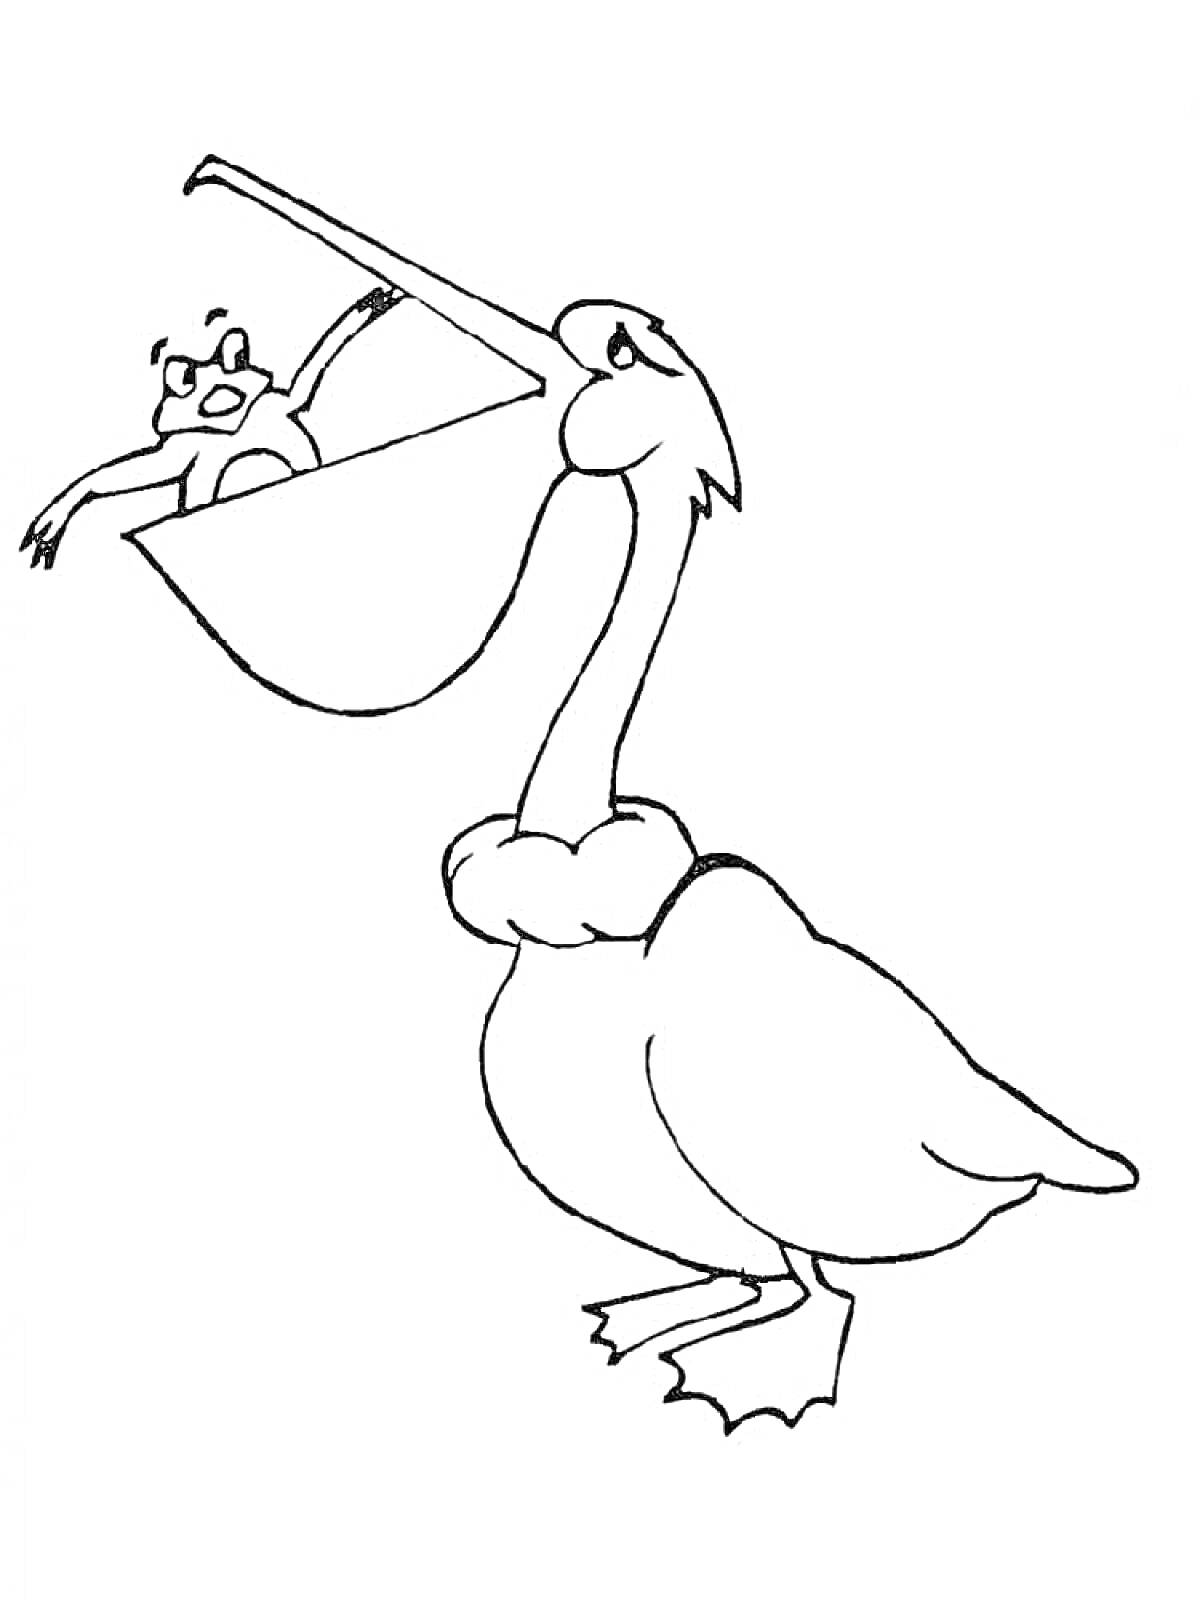 Раскраска Пеликан с лягушкой в клюве